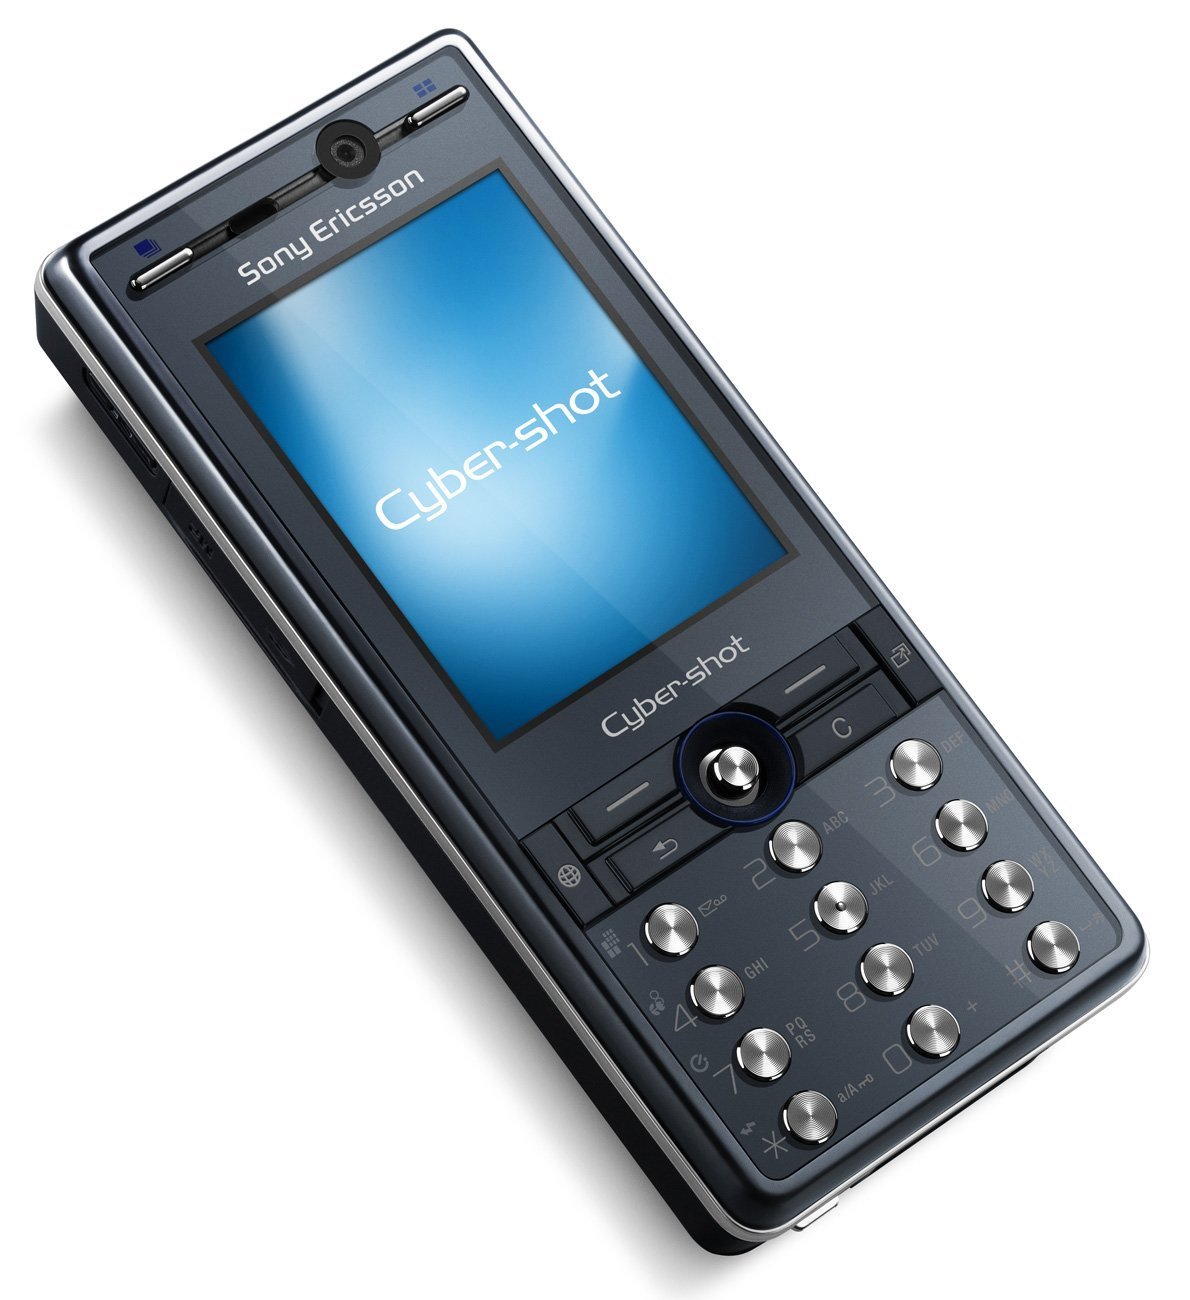 Sony Ericsson K810i Tasten-Handy Bluetooth Cyber-Shot Kamera MP3 wie Neu